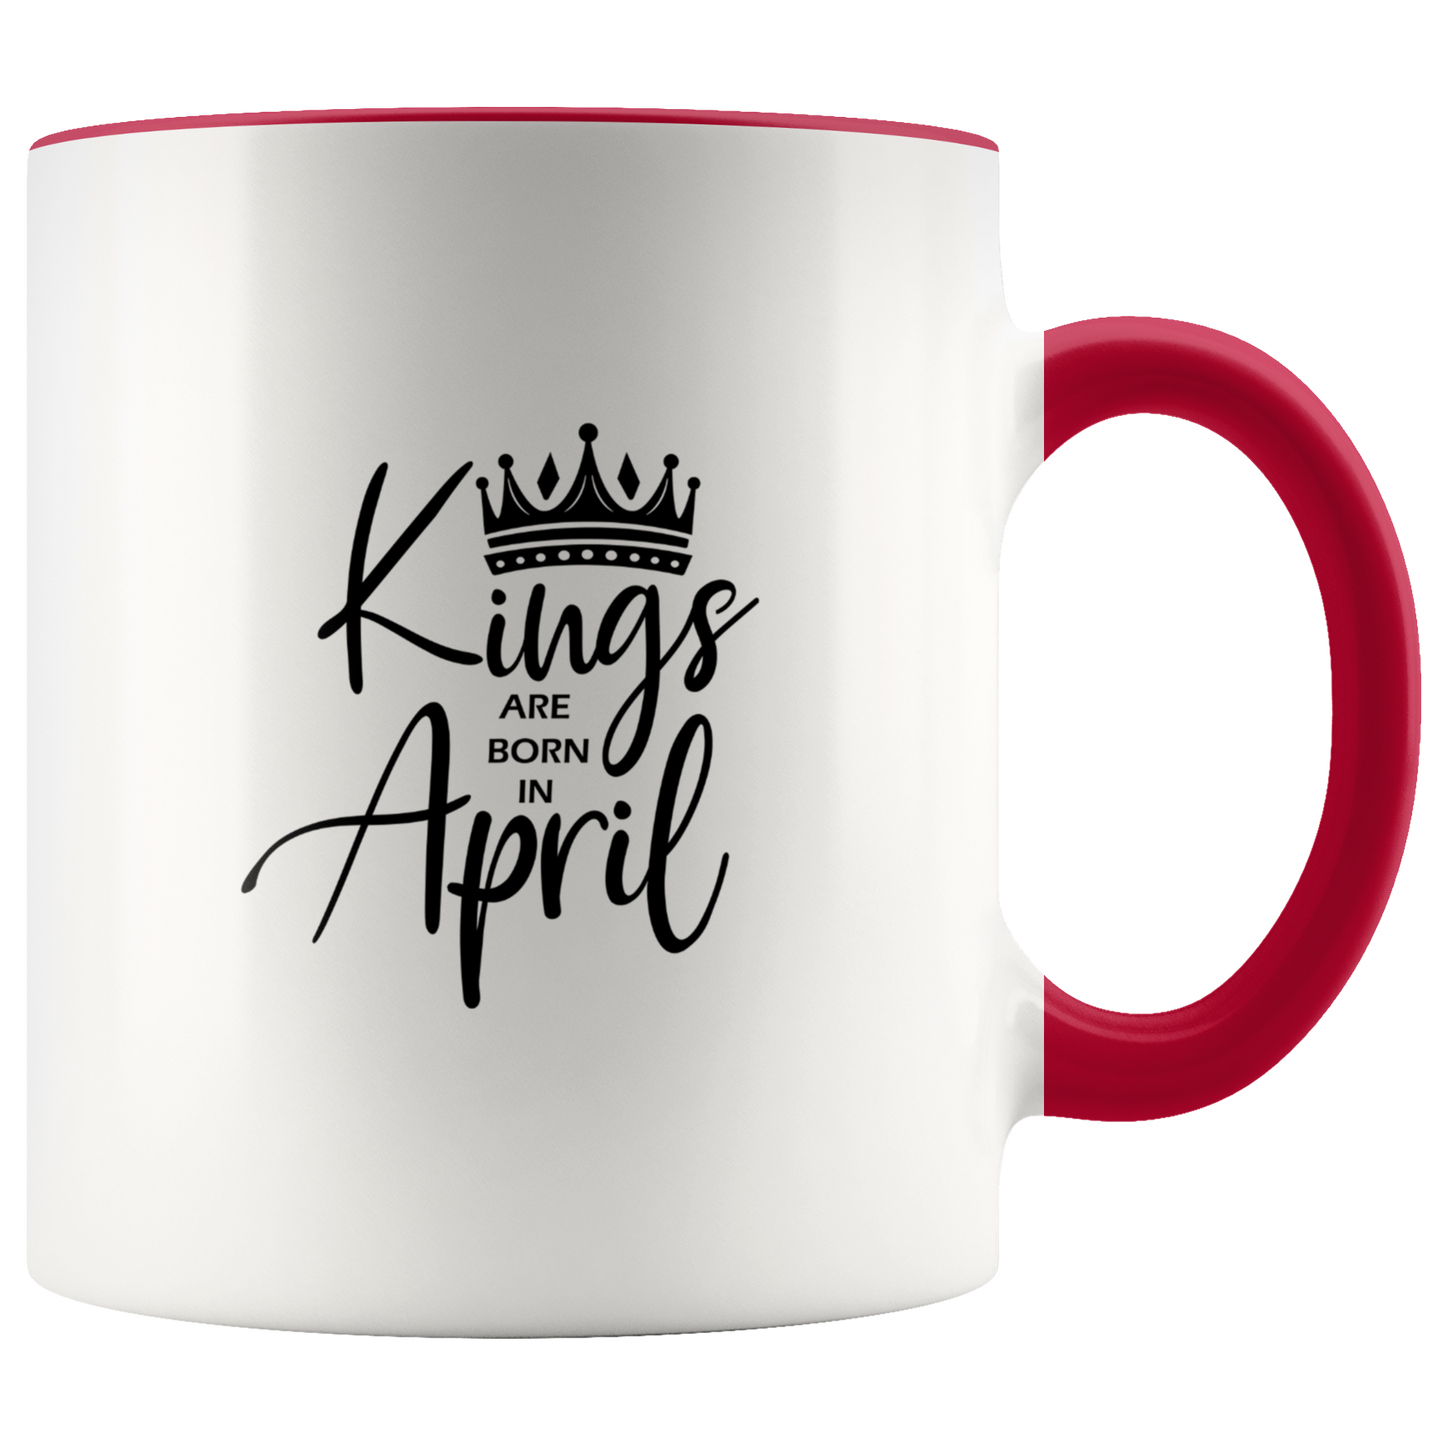 Kings Are Born in April Mug